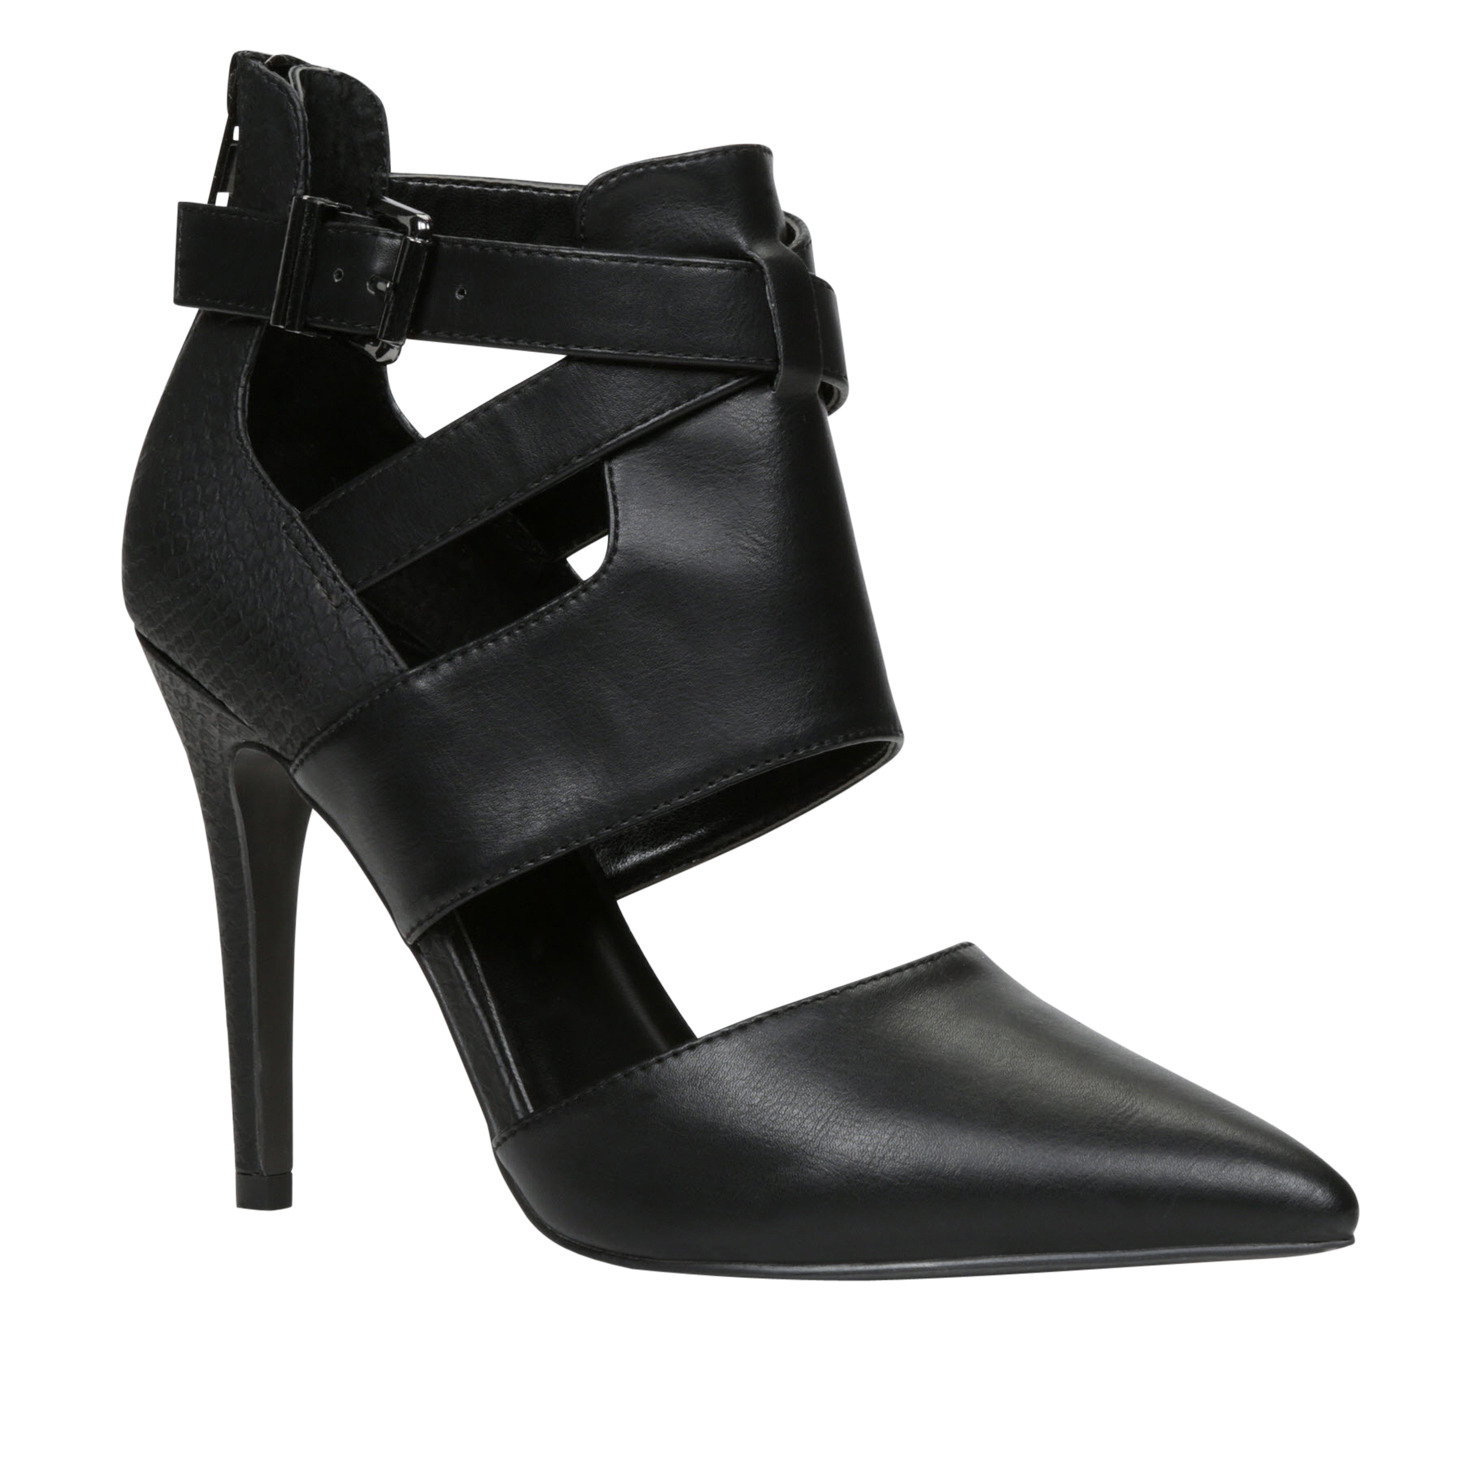 Fierce Peat | High Heels Daily â€“ #1 for sexy stiletto heels